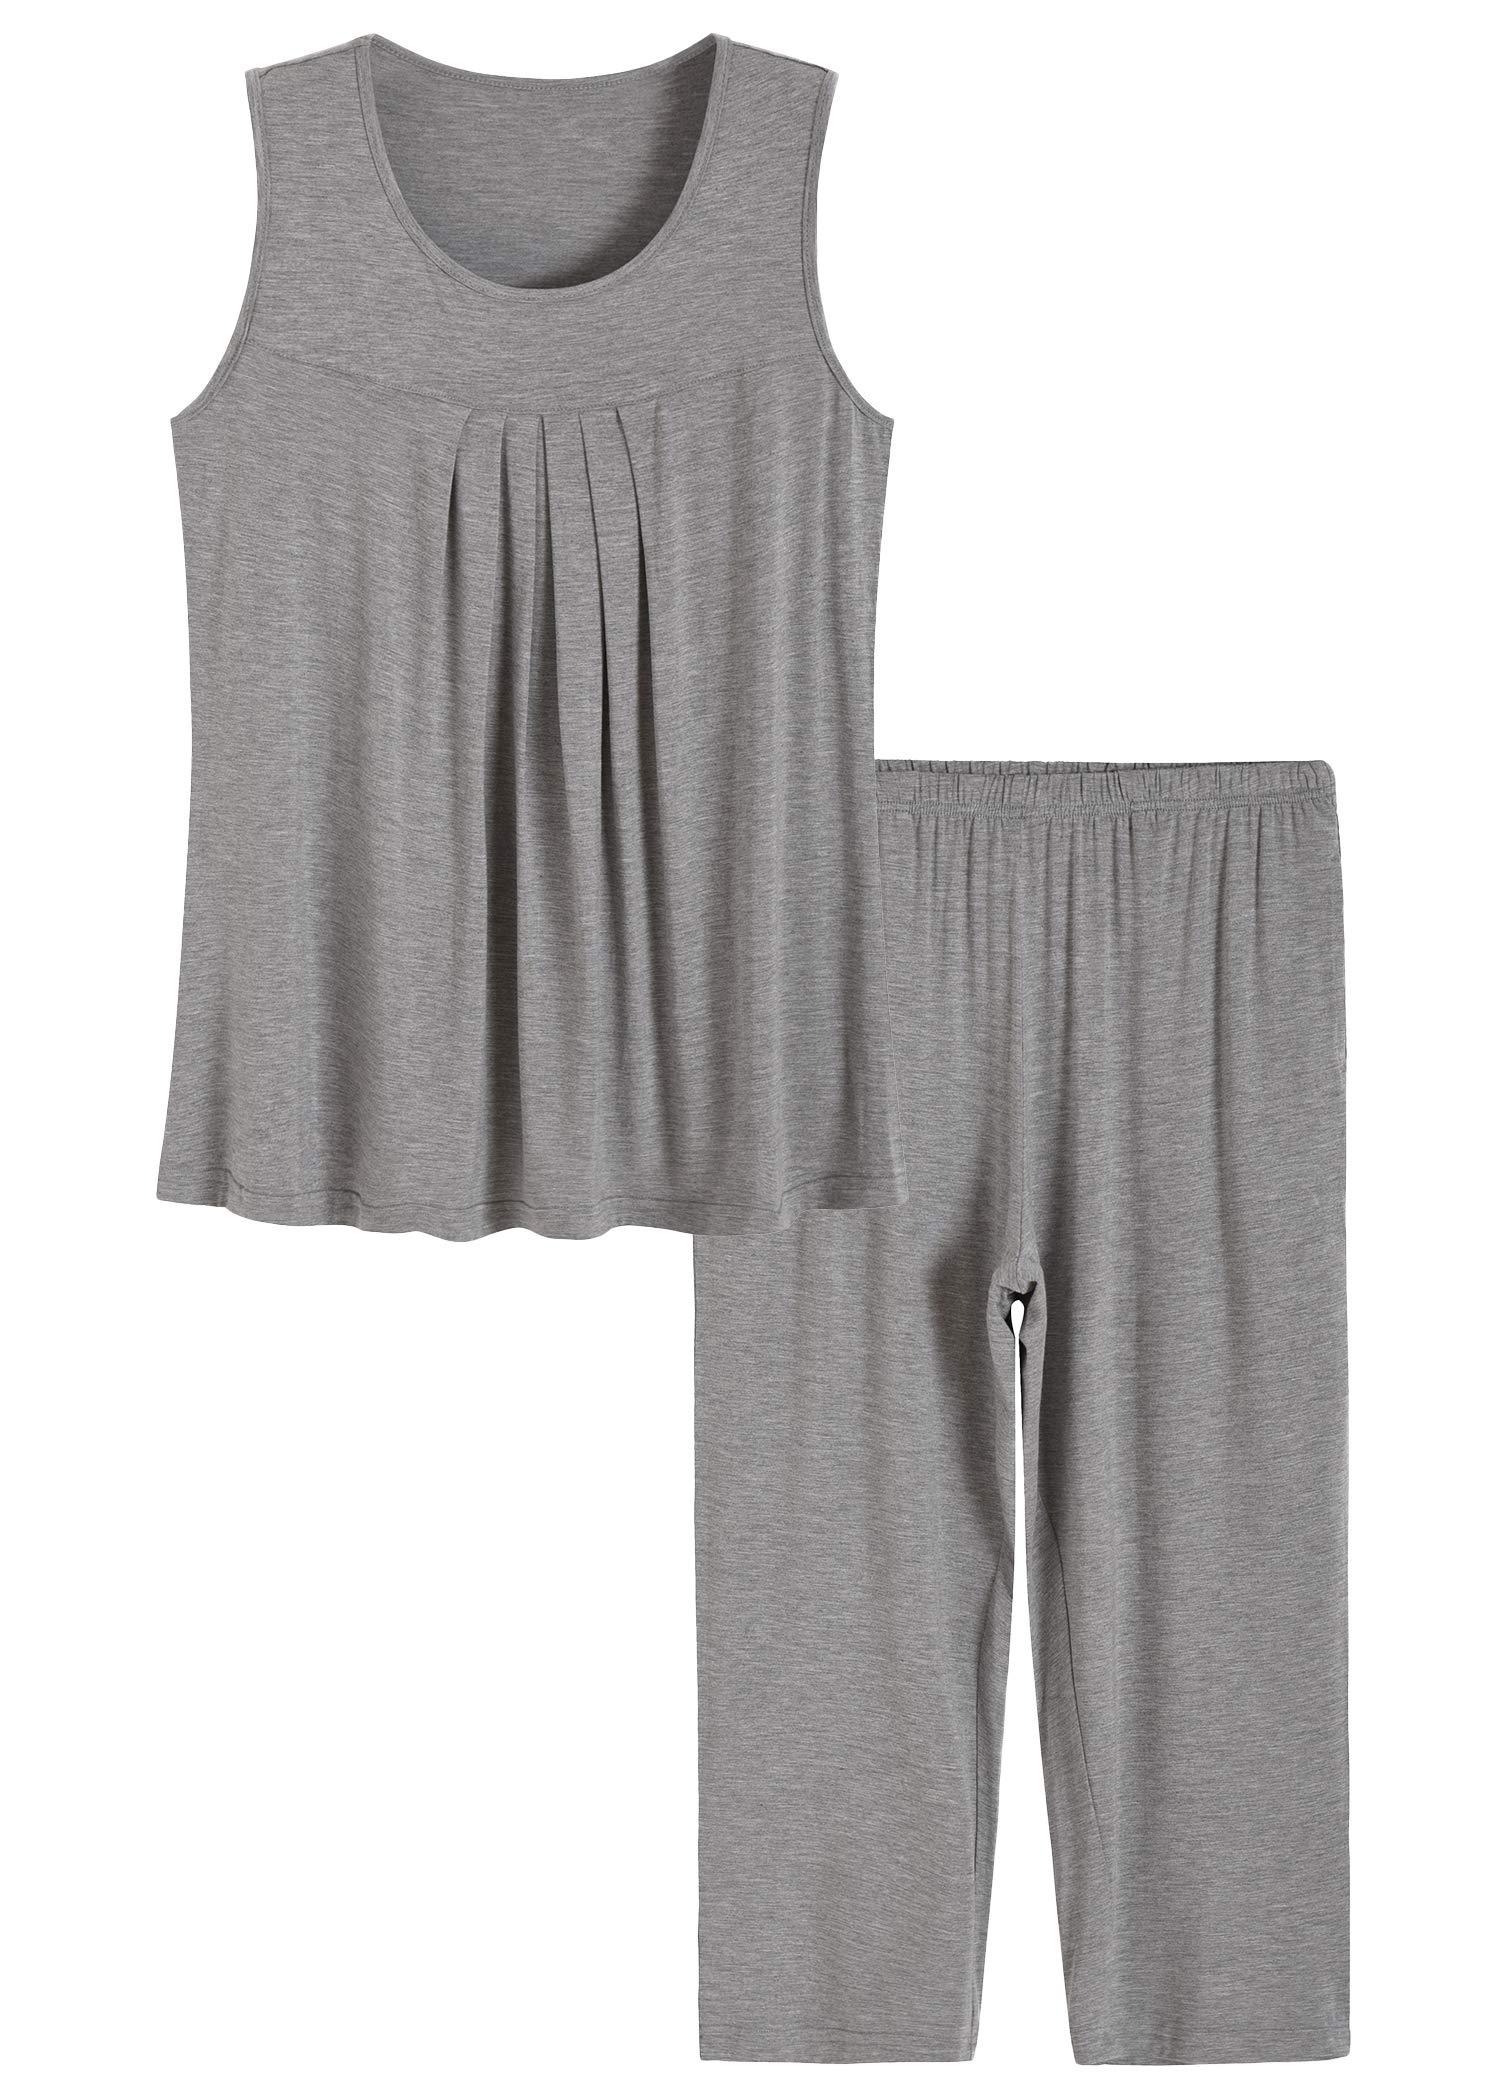 NACHILA Pajamas for Women-Viscose Made from Bamboo,Ribbed Pjs Racerback  Tank Top and Capri Pants Sleeveless Pajama Sets S-4X